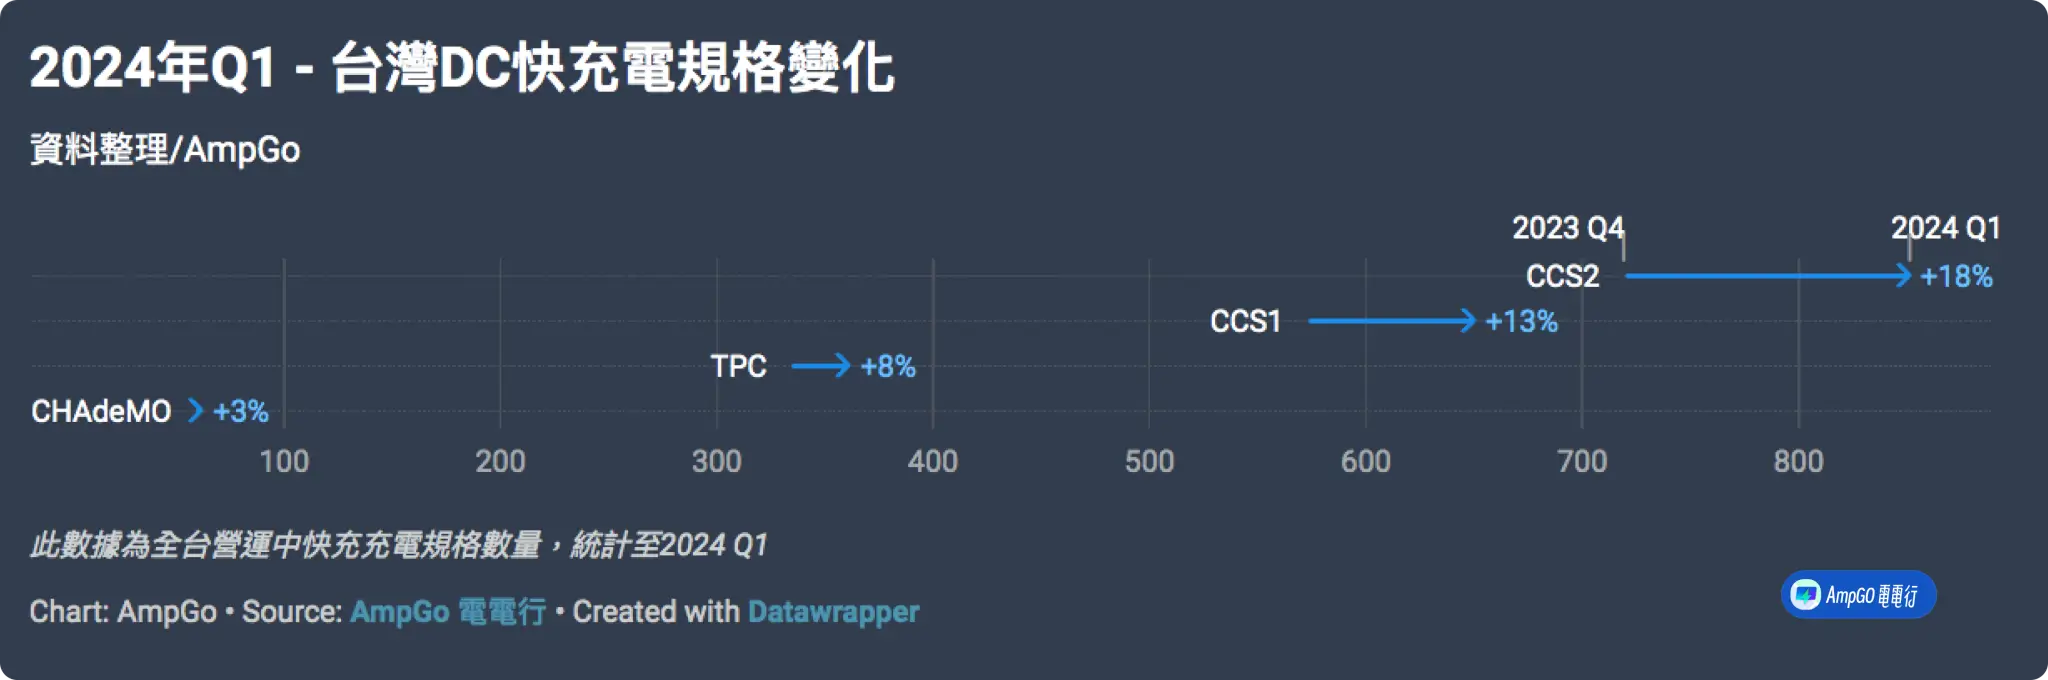 2024 q1 taiwan dc fast charging specs change